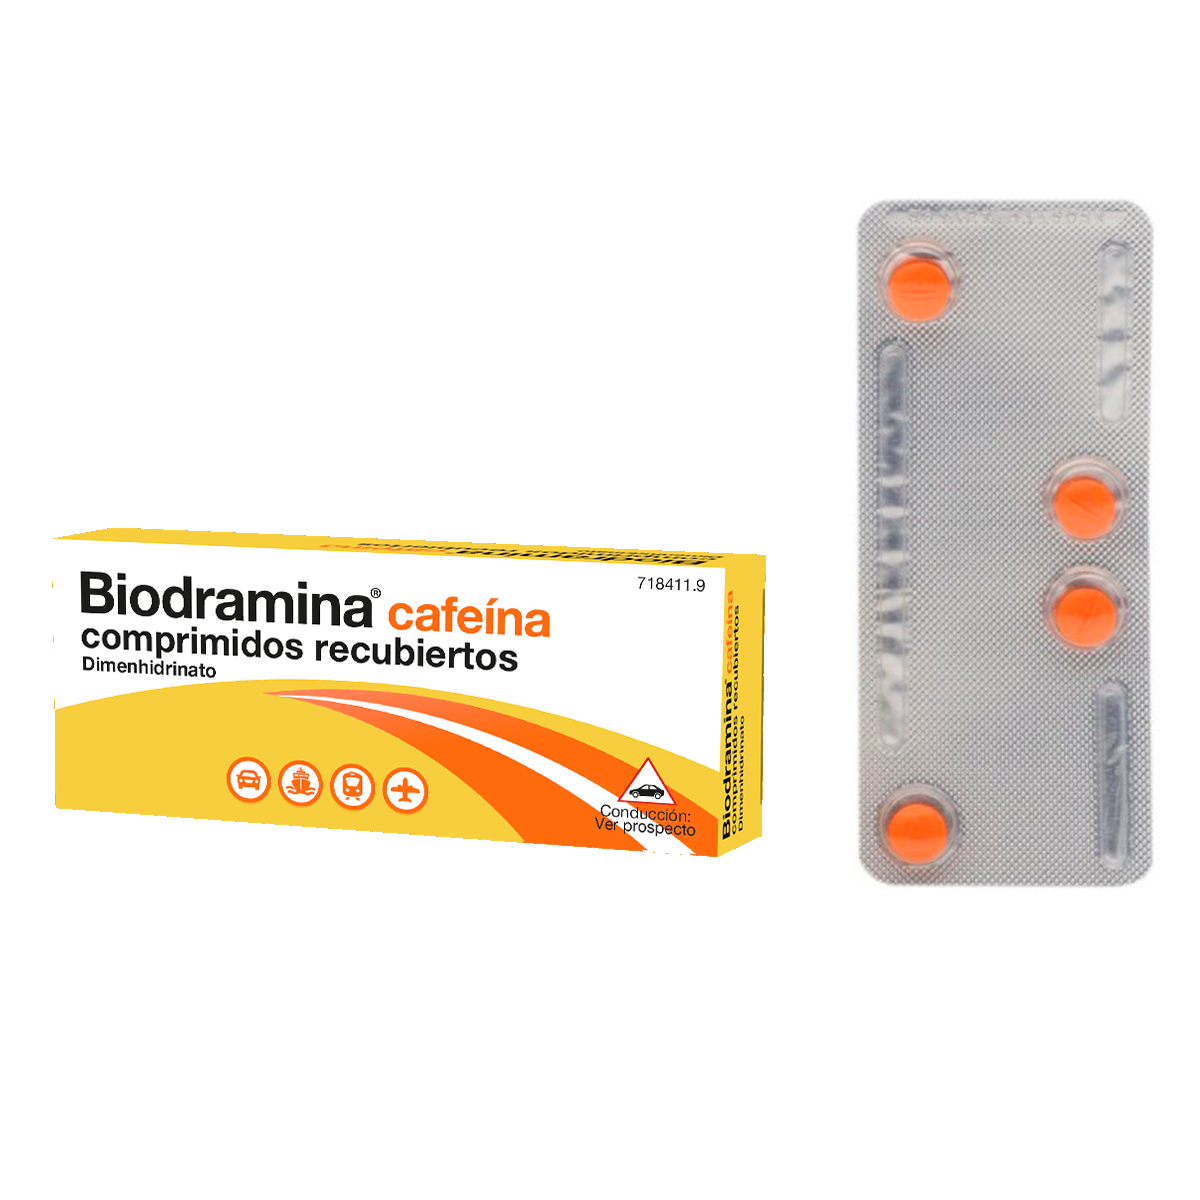 Biodramina Cafena 4 comprimidos